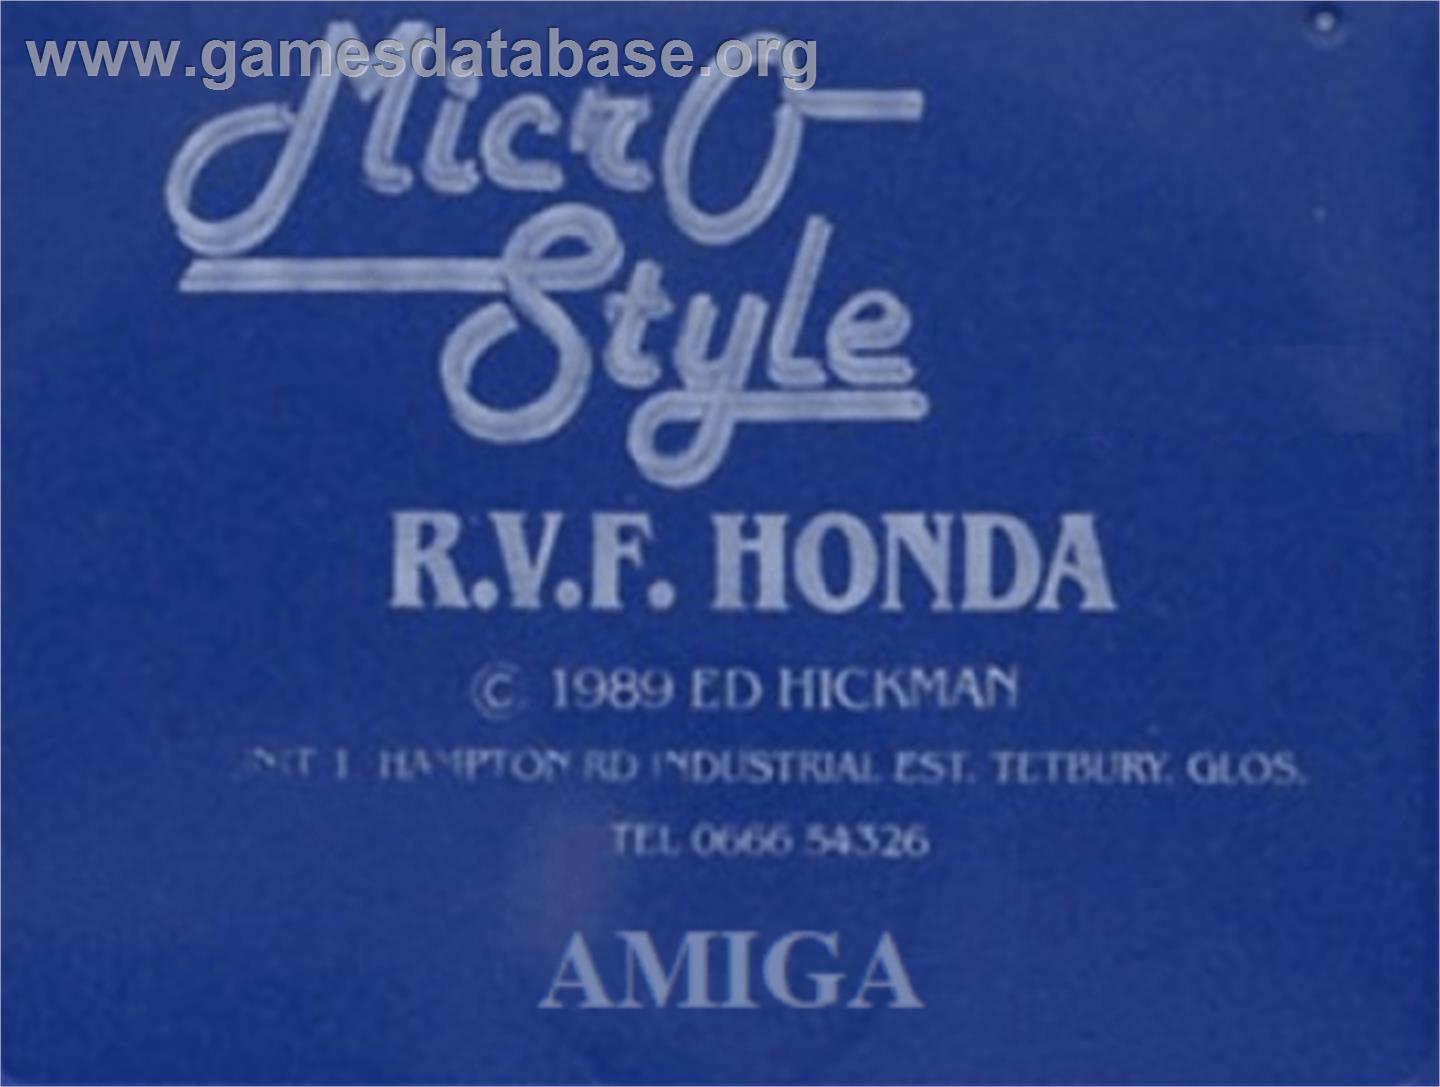 RVF Honda - Commodore Amiga - Artwork - Cartridge Top